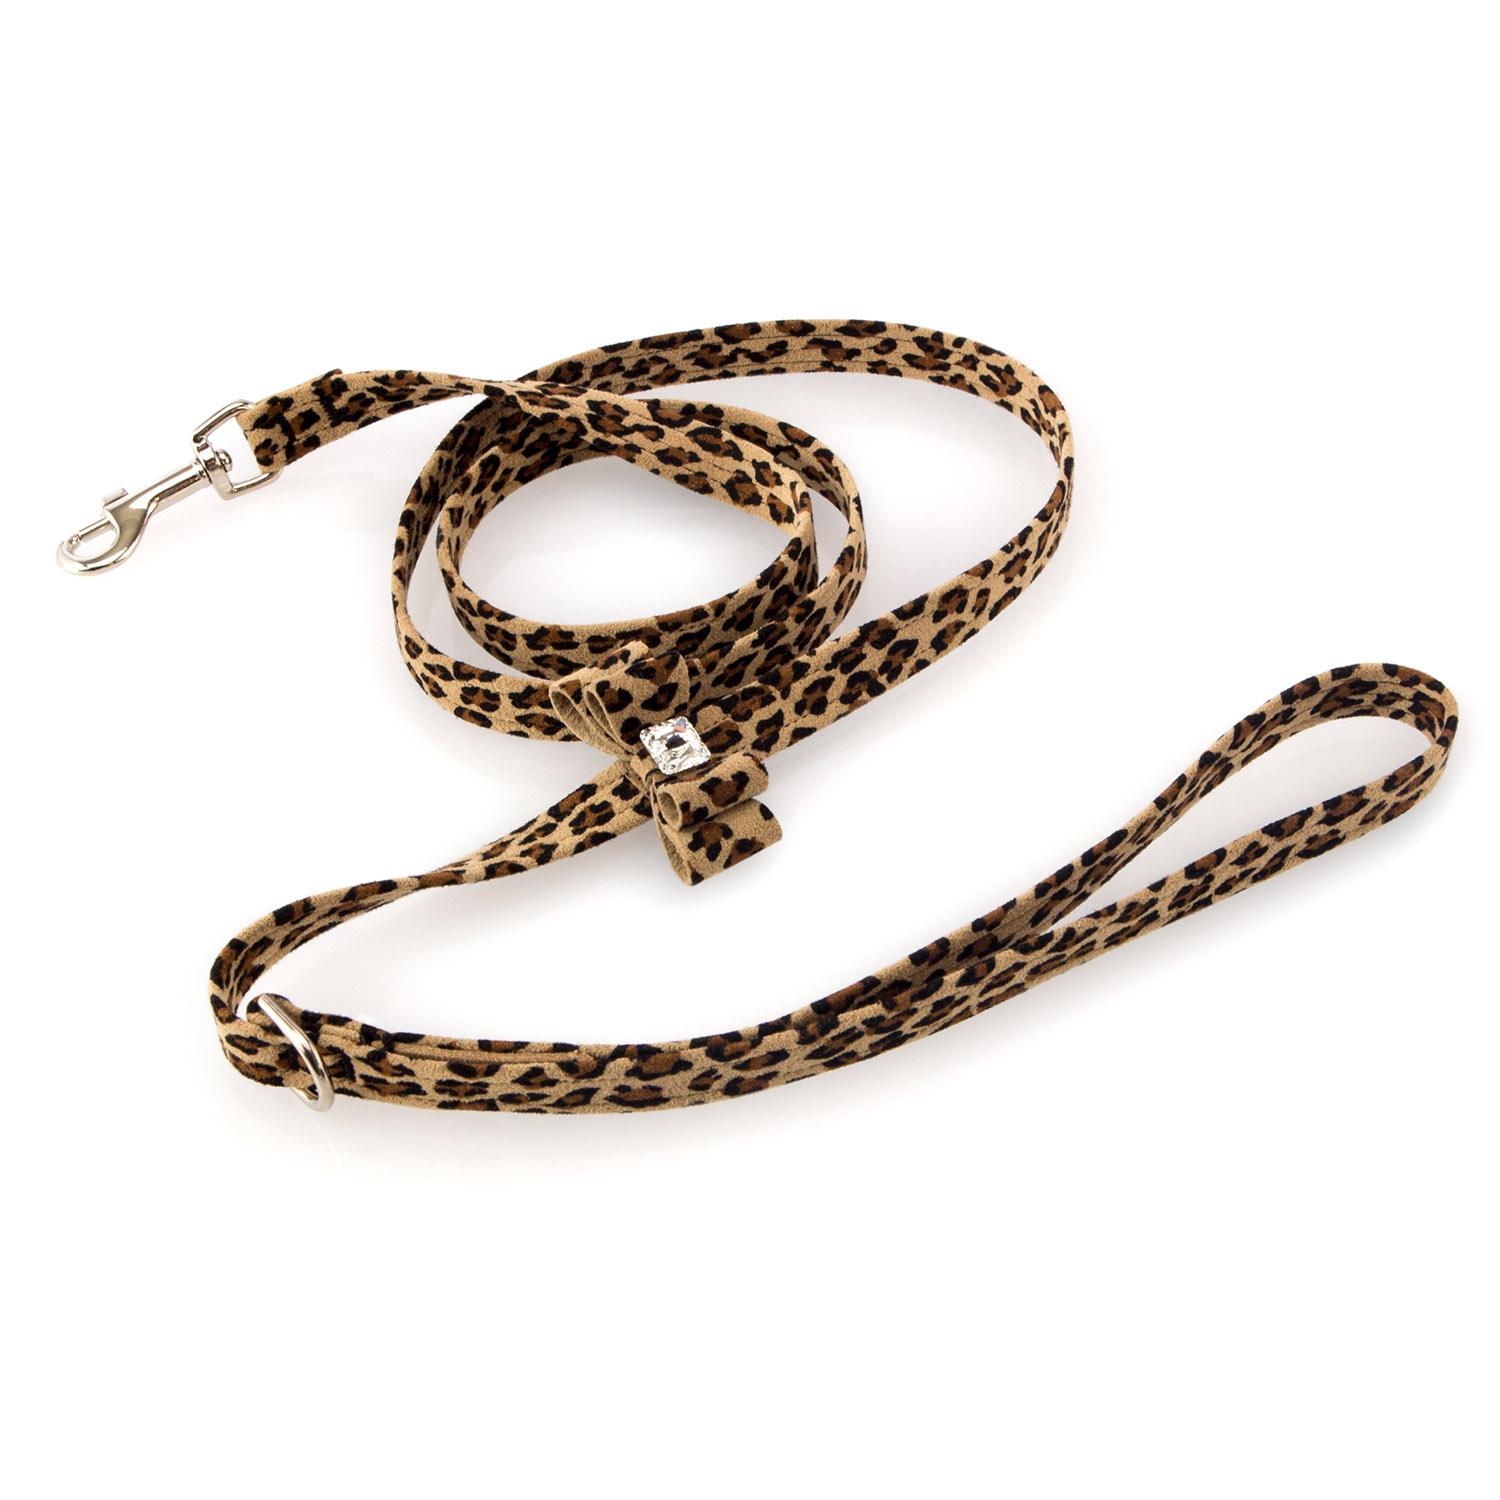 Cheetah Couture Big Bow Dog Leash by Susan Lanci - Cheetah